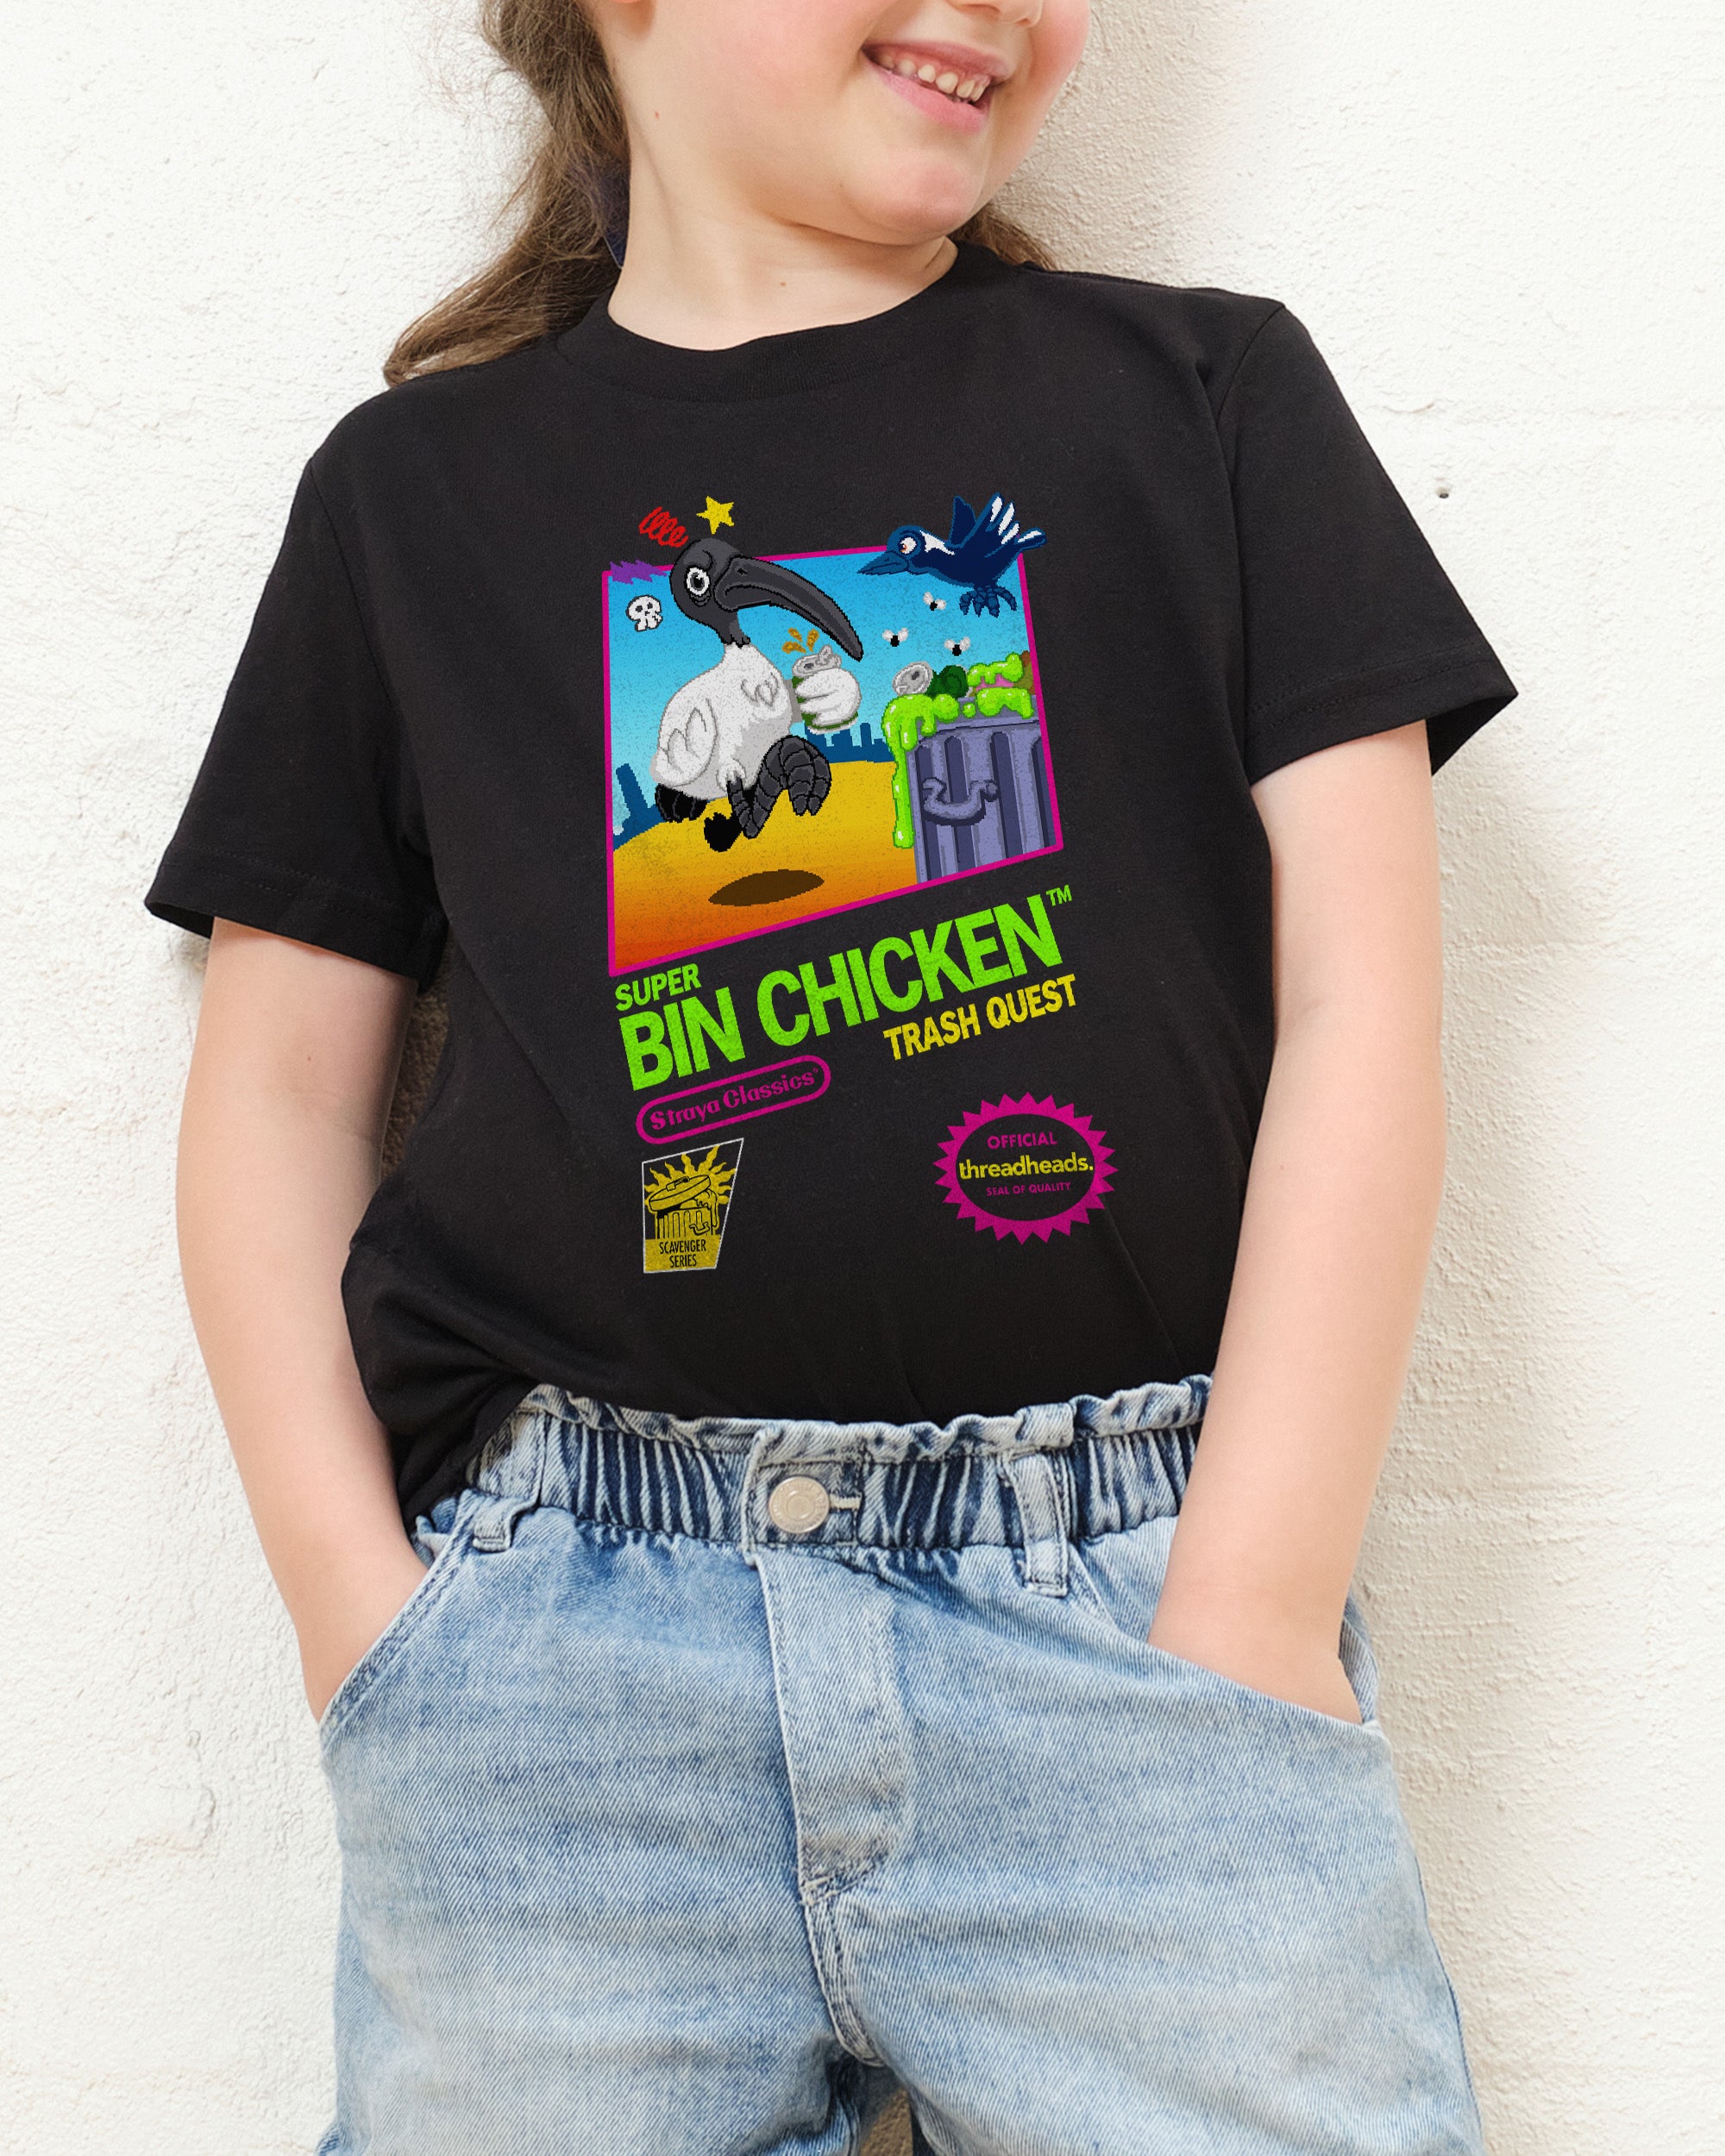 Super Bin Chicken Kids T-Shirt